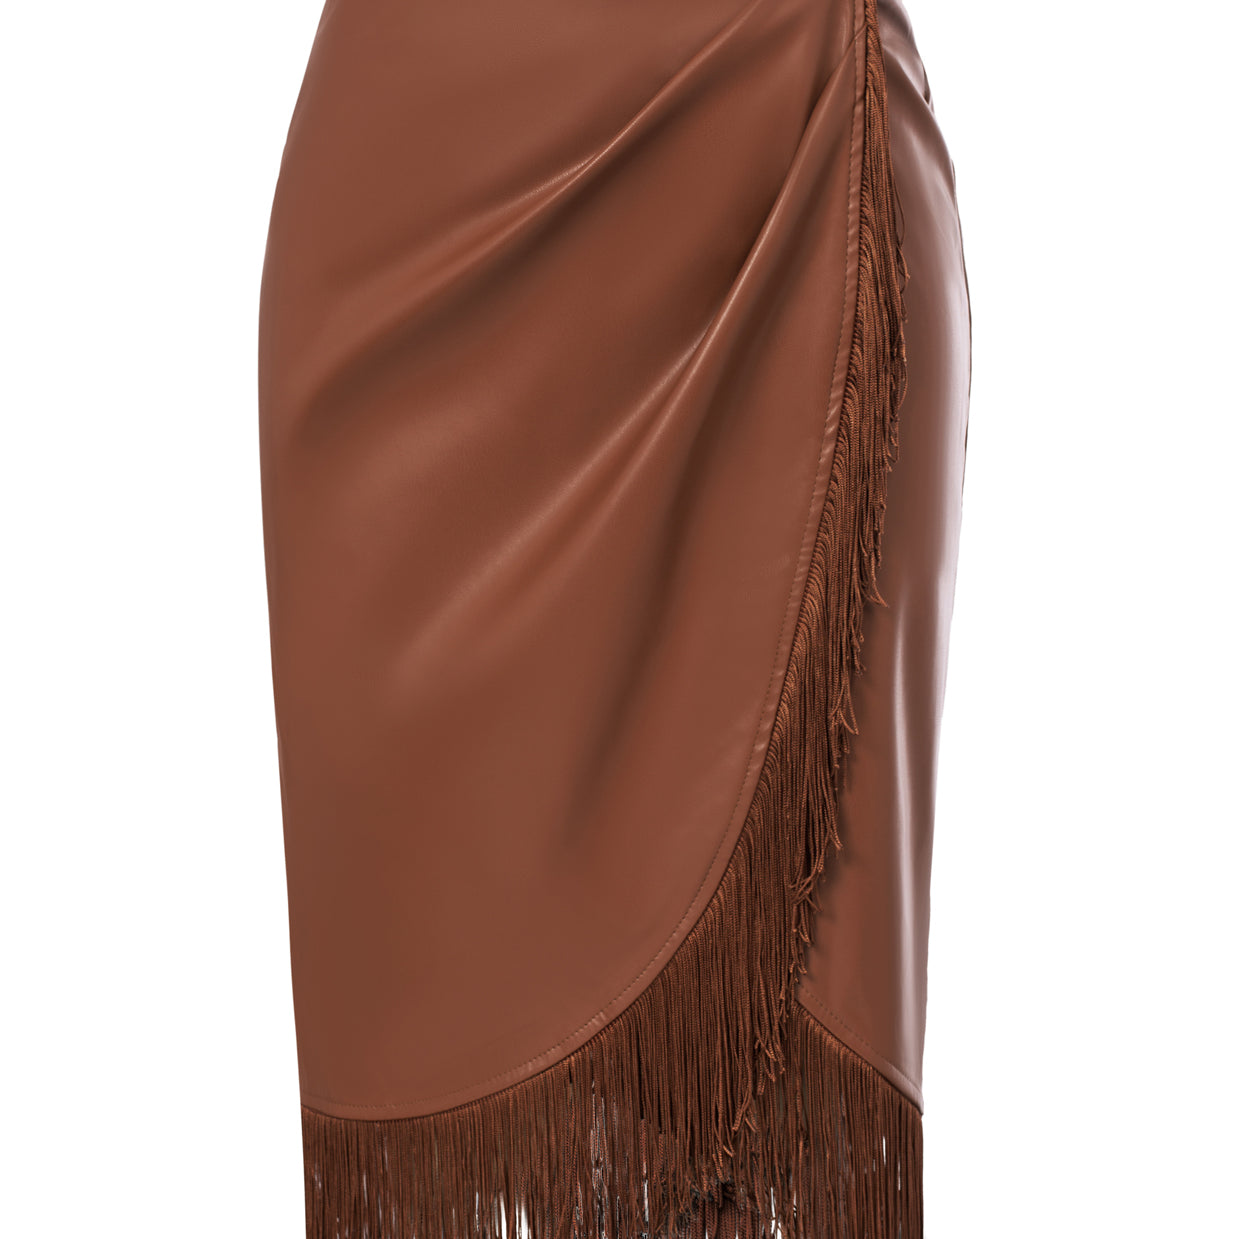 Seckill Offer⌛Fringe Bodycon Leather Skirt with Slit Knee Length Pencil Skirt